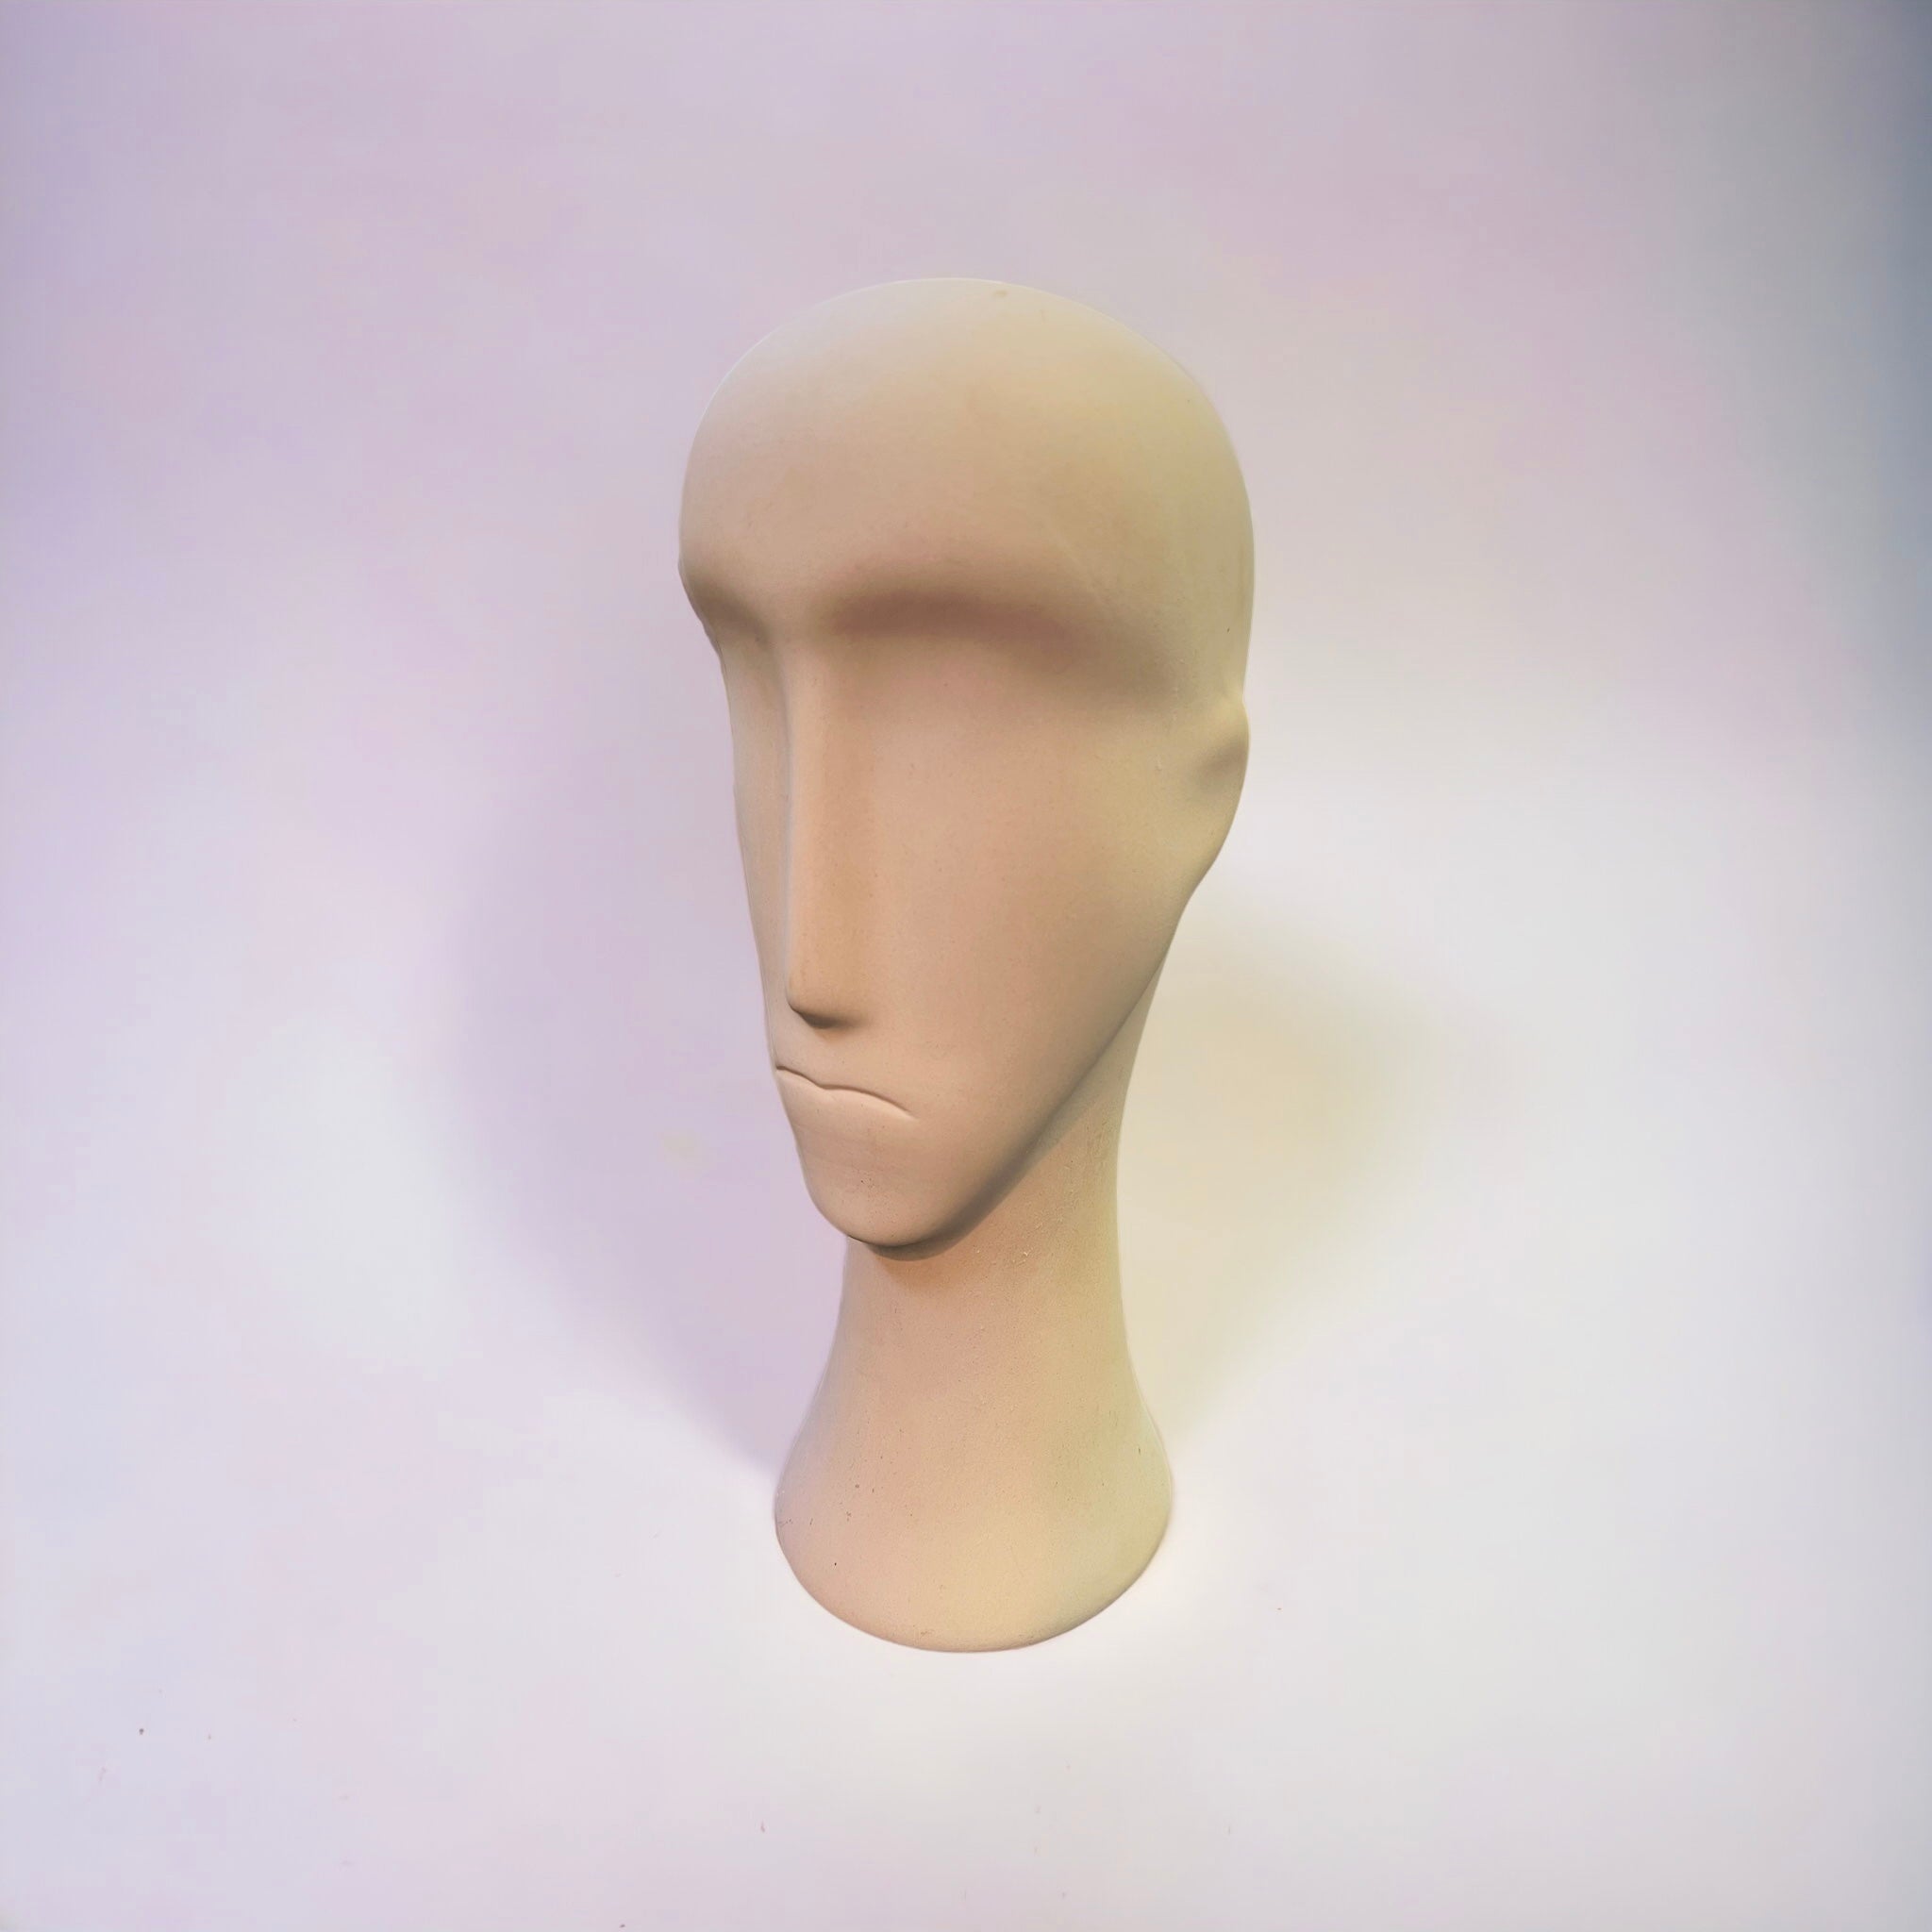 IKEA Nagon Ceramic Head Sculpture (Vintage)